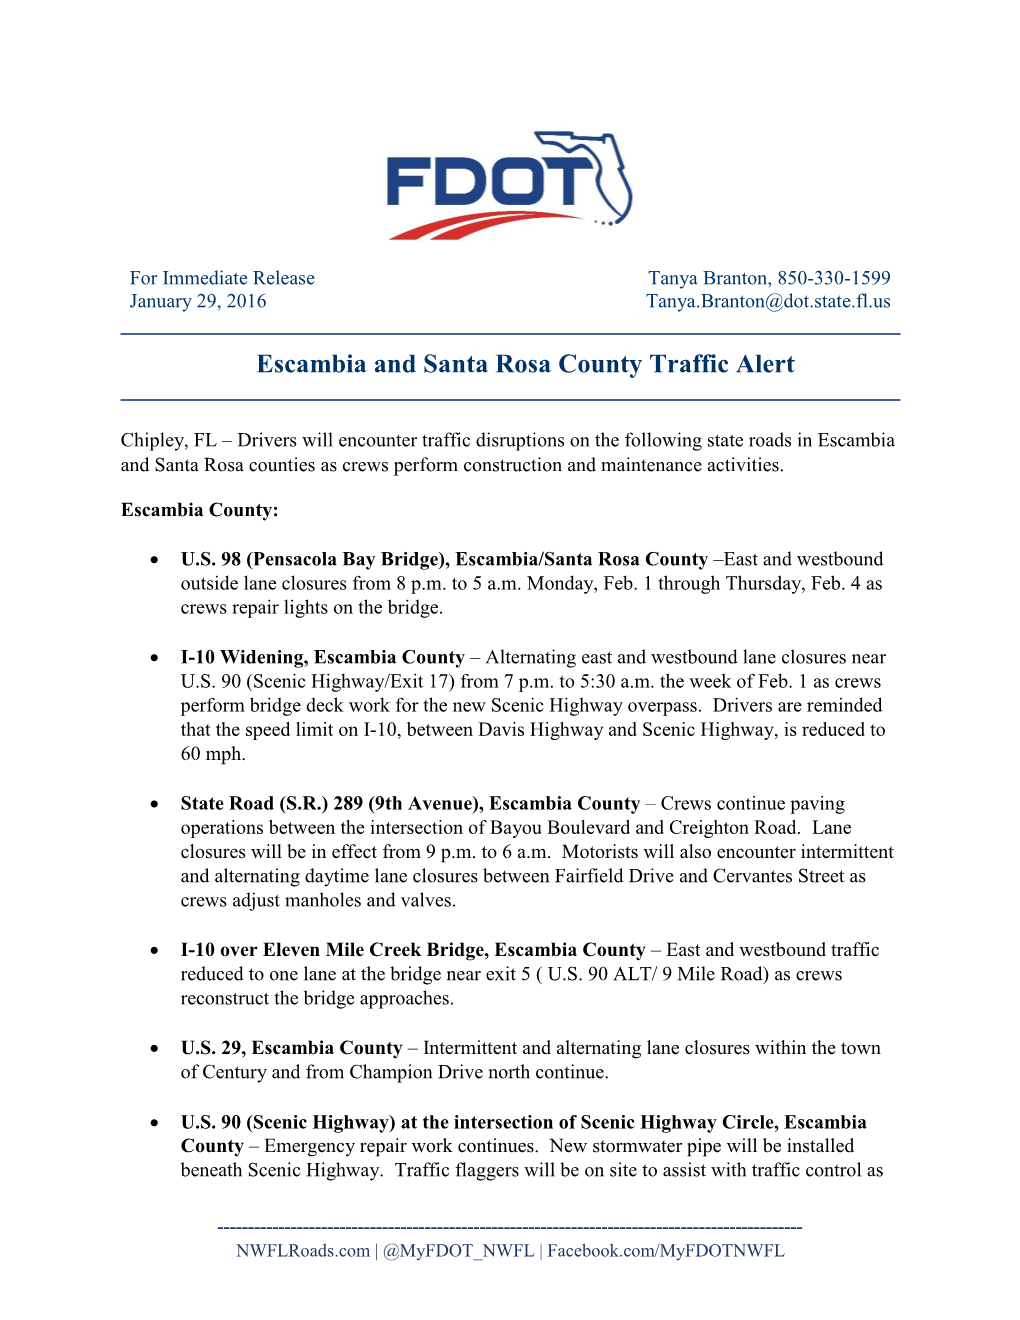 Escambia and Santa Rosa County Traffic Alert